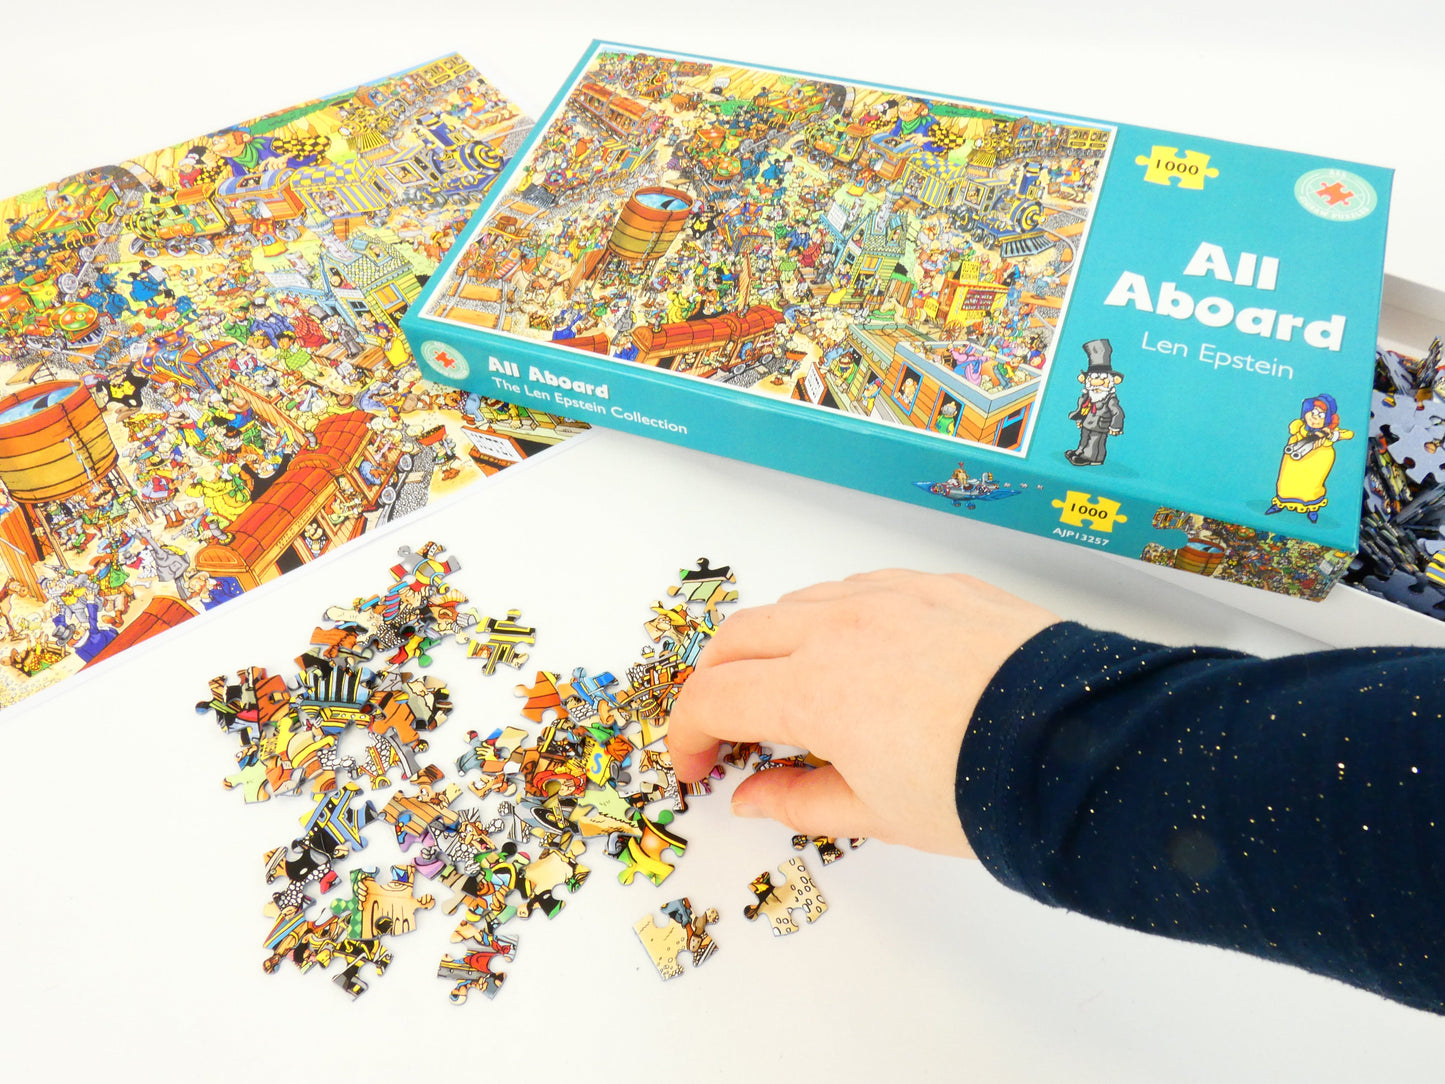 All Aboard - Len Epstein 1000 Piece Jigsaw Puzzle